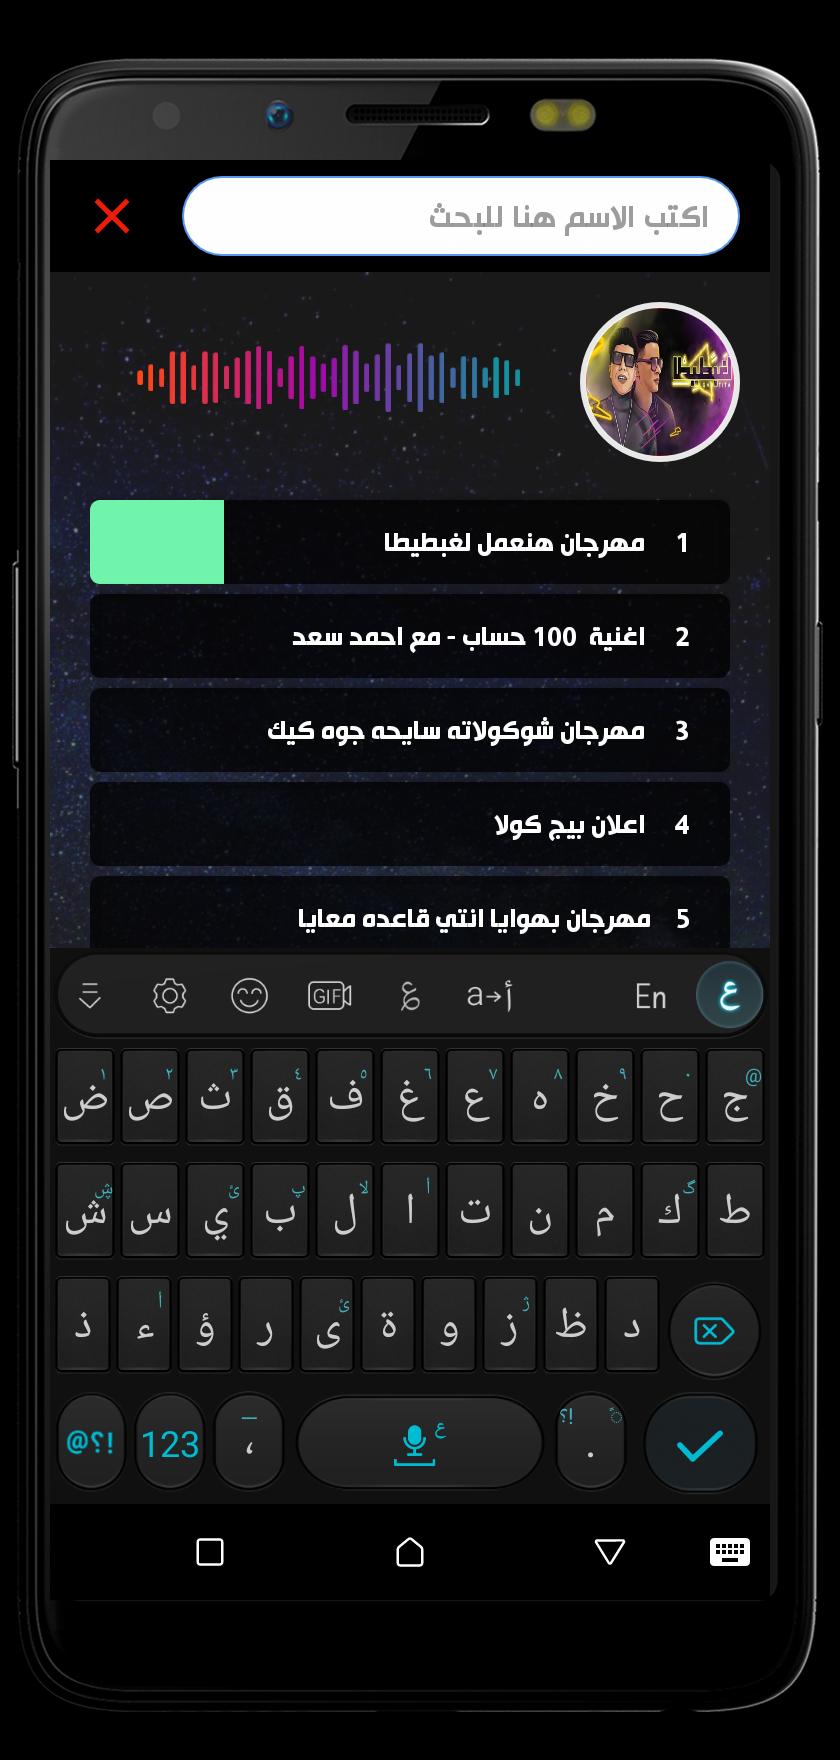 مهرجان هنعمل لغبطيطا ( ركبت ال X6 ) بدون نت 2020 for Android - APK Download